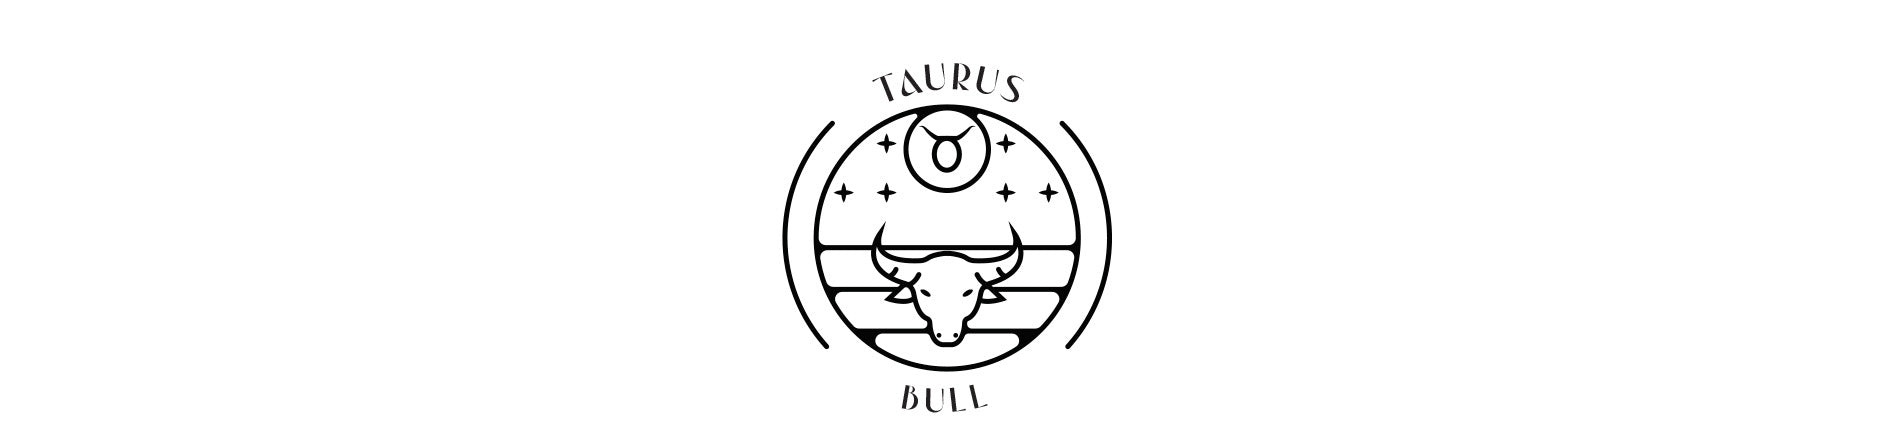 Broken English Jewelry - Zodiac Taurus